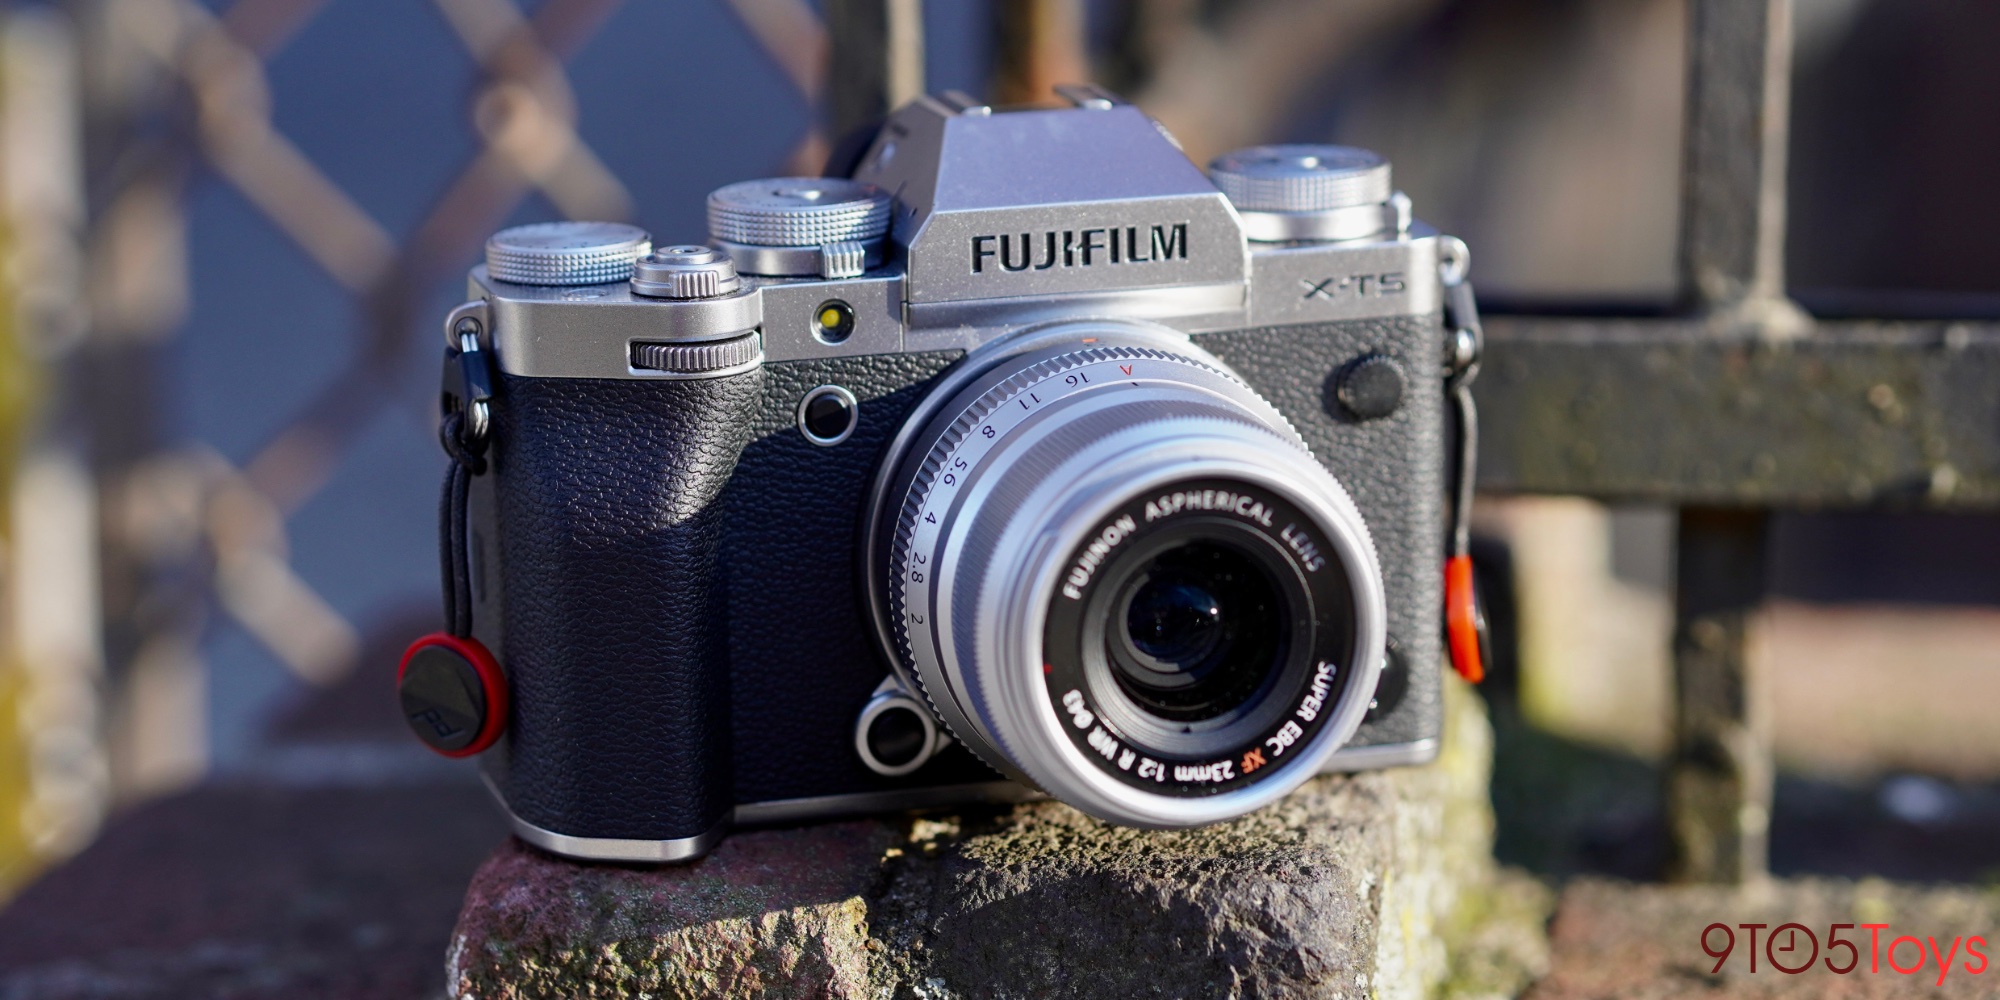 Fujifilm XT5 Portrait Photography - First Impressions! 